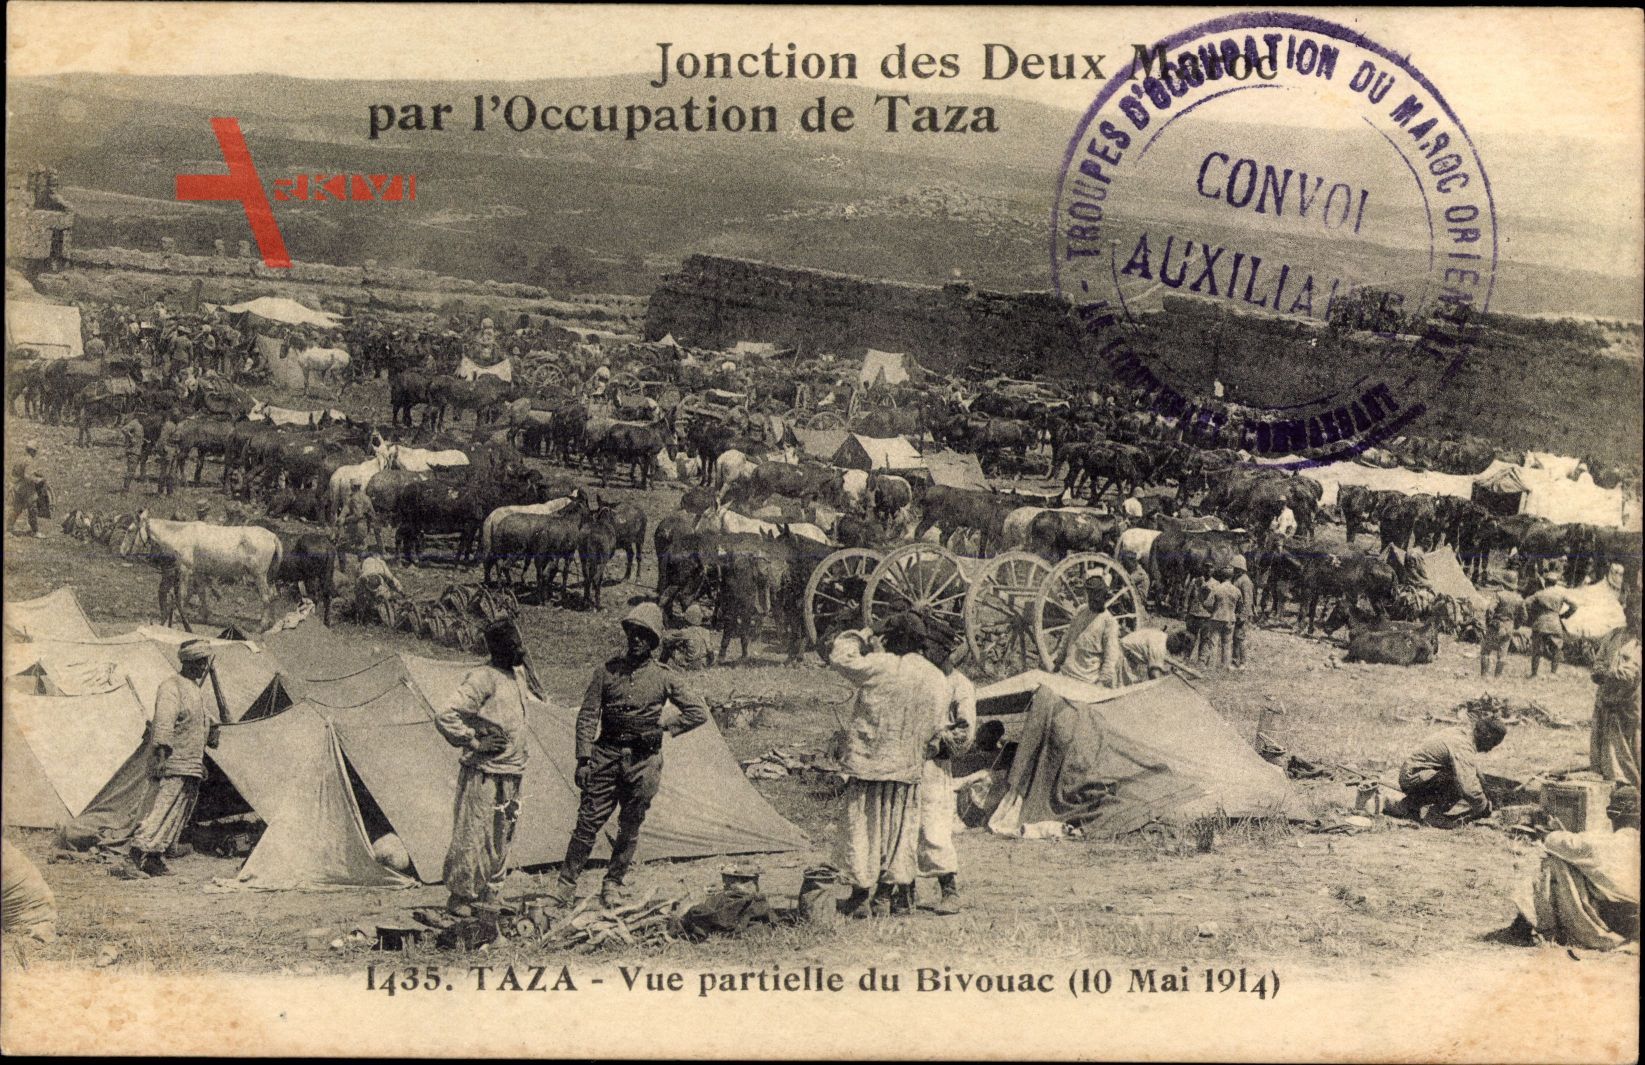 Taza Marokko, Vue partielle du Bivouac, 10 Mai 1914, Occupation